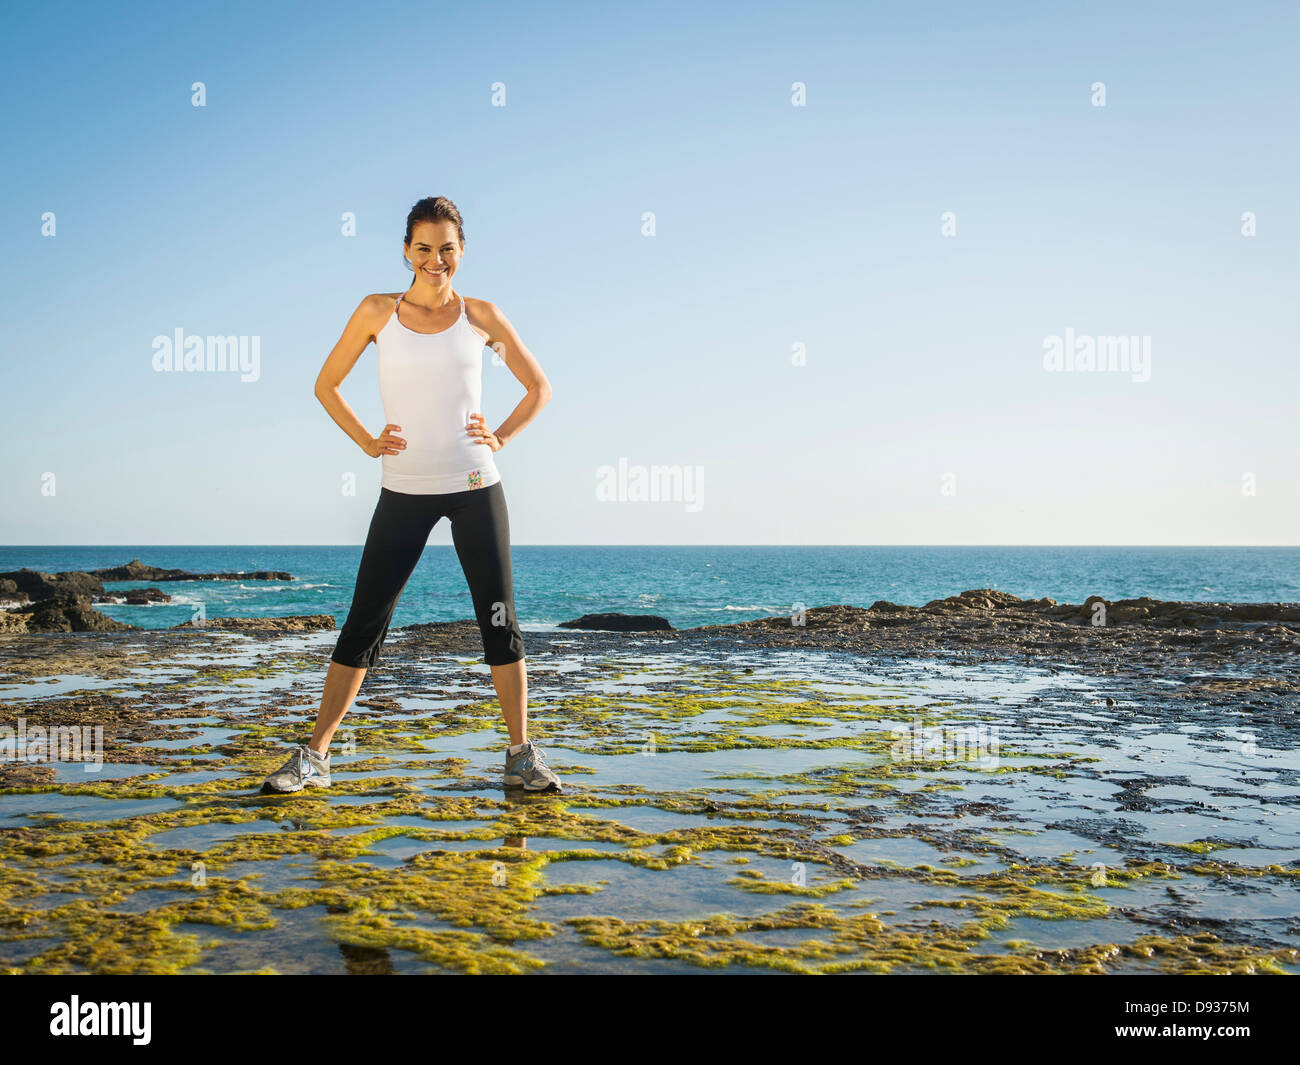 Mixed race runner standing on rocky beach Stock Photo